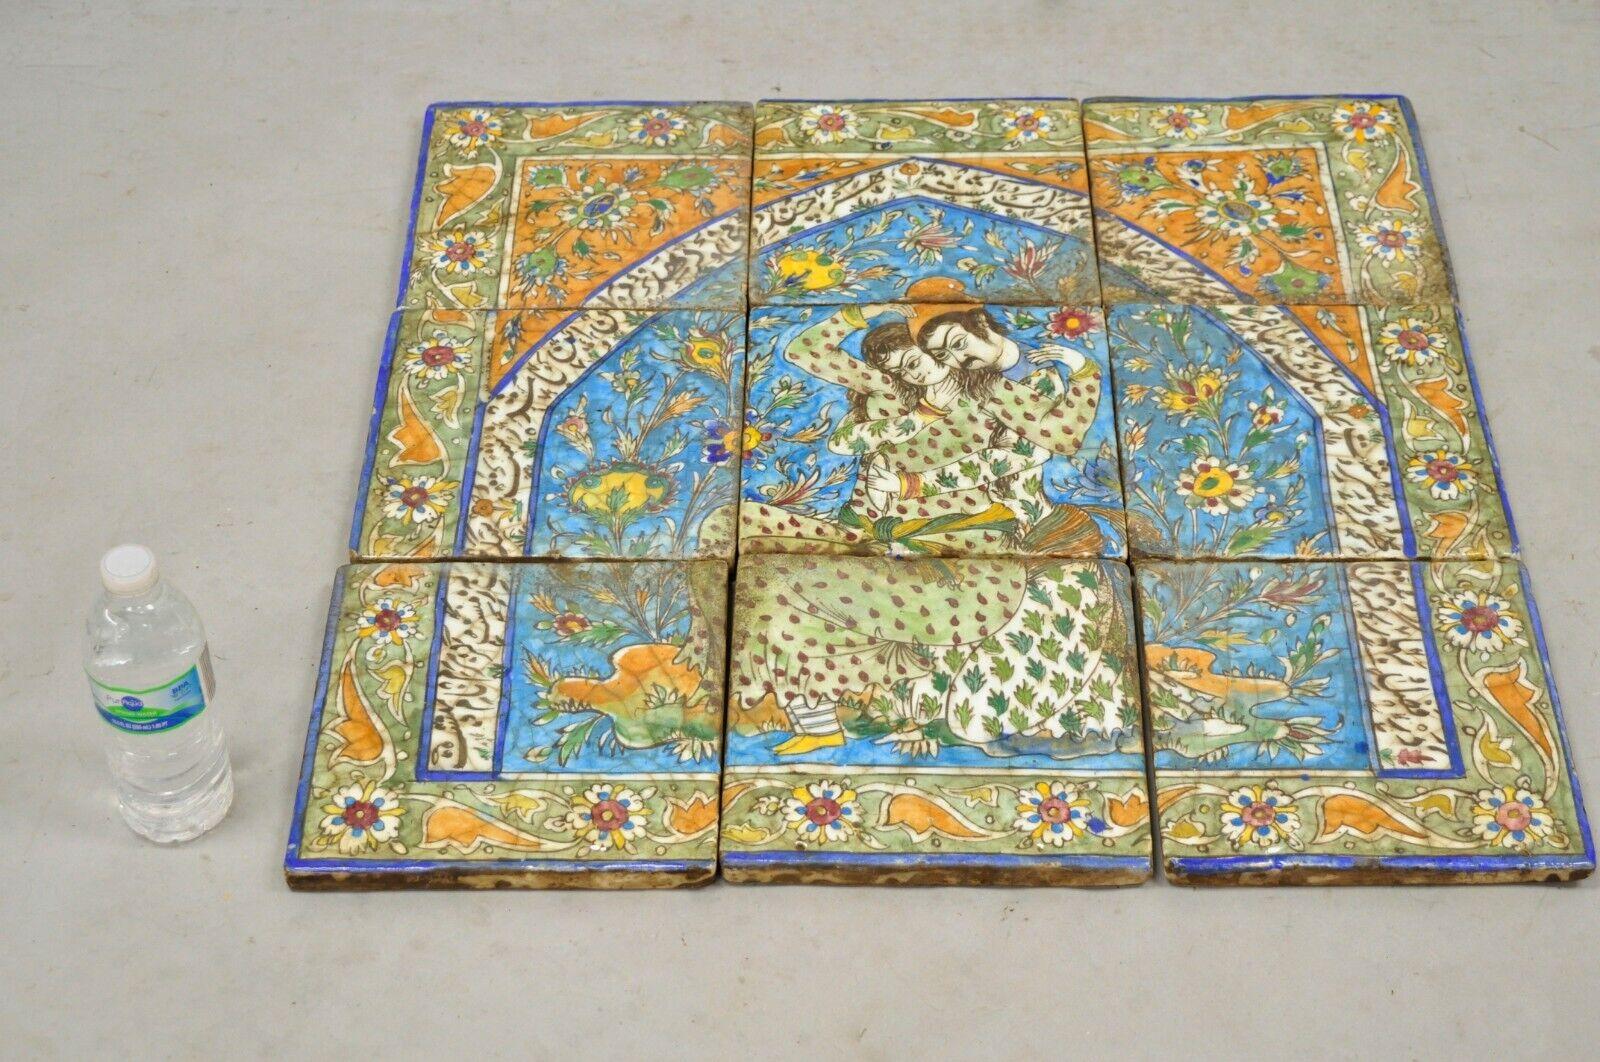 Antique Persian Iznik Qajar style ceramic pottery blue and orange tile man and woman mosaic set C6 - 9 Pc Set. Item features original crackle glazed finish, heavy ceramic pottery construction, very impressive detail, wonderful style and form. Great